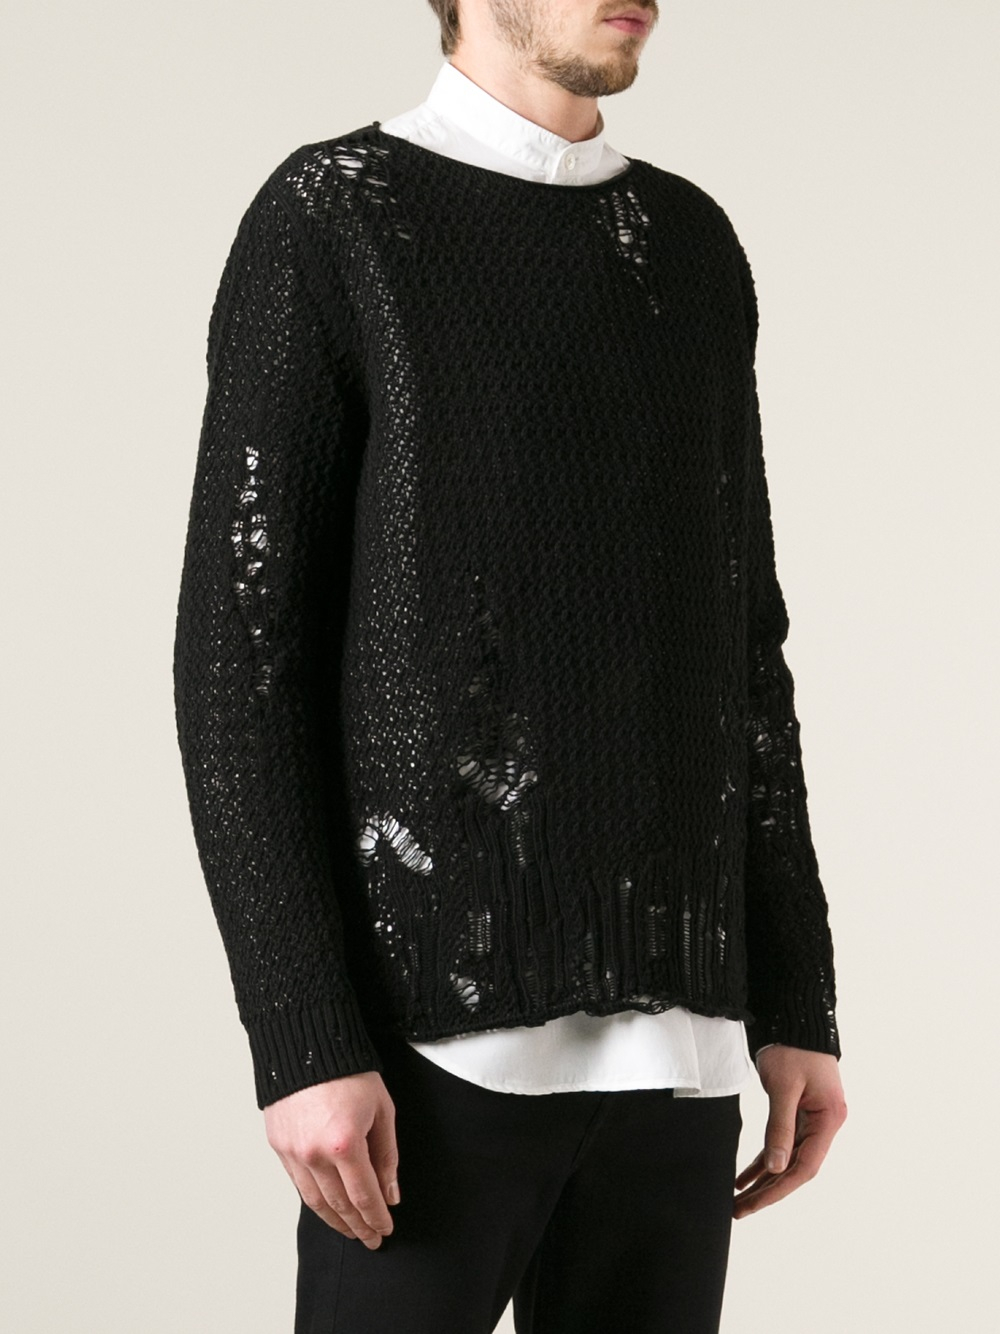 Alexander McQueen Distressed Sweater in Black for Men - Lyst